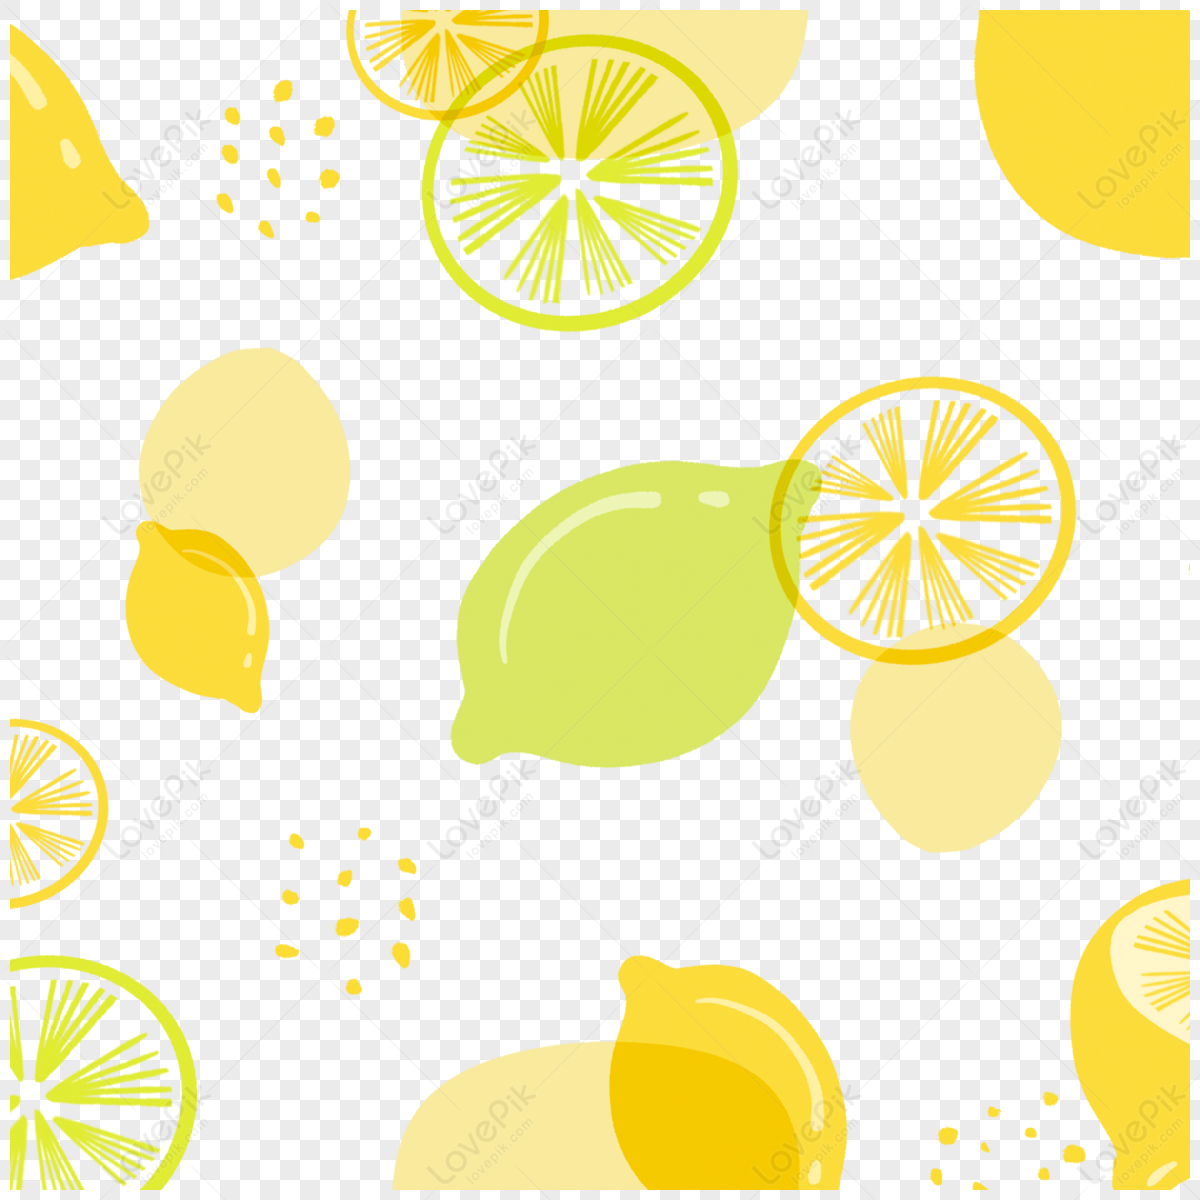 Lemon Fruit Orange PNG Images With Transparent Background | Free ...